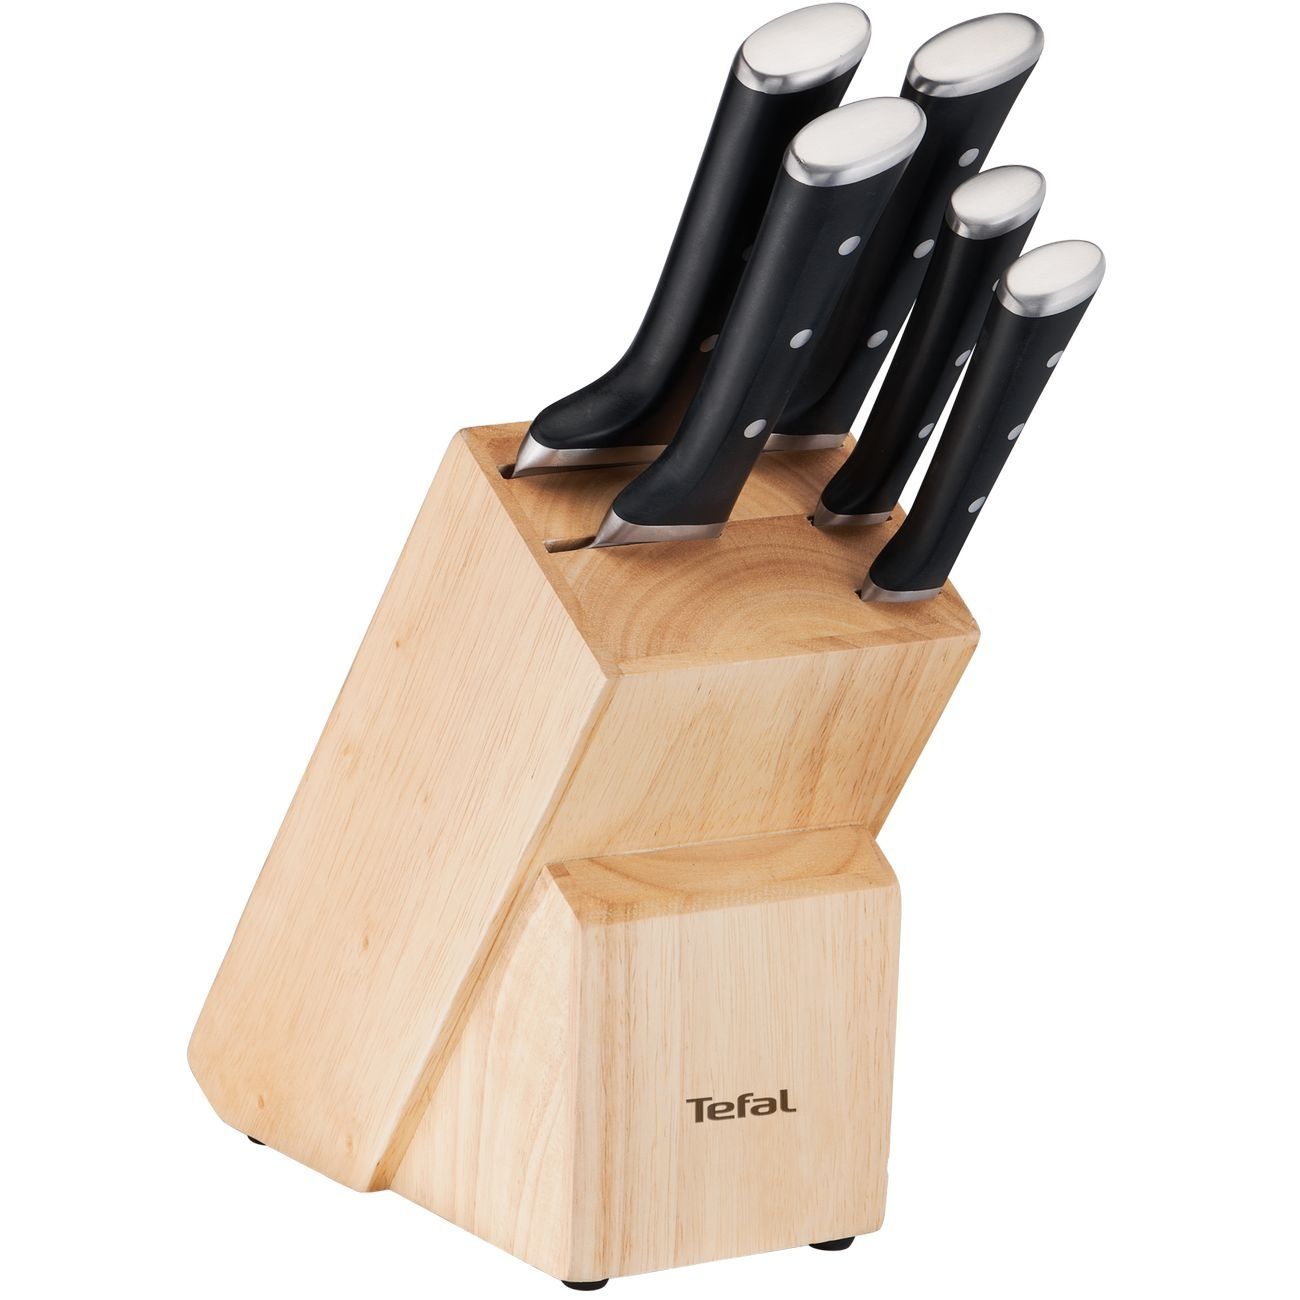 Набор кухонных ножей tefal. Набор Tefal Ice Force k232s574. Набор кухонных ножей Tefal expertise (3 ножа) k121s375. Нож Tefal Ice Force. Набор ножей Tefal k121s575.